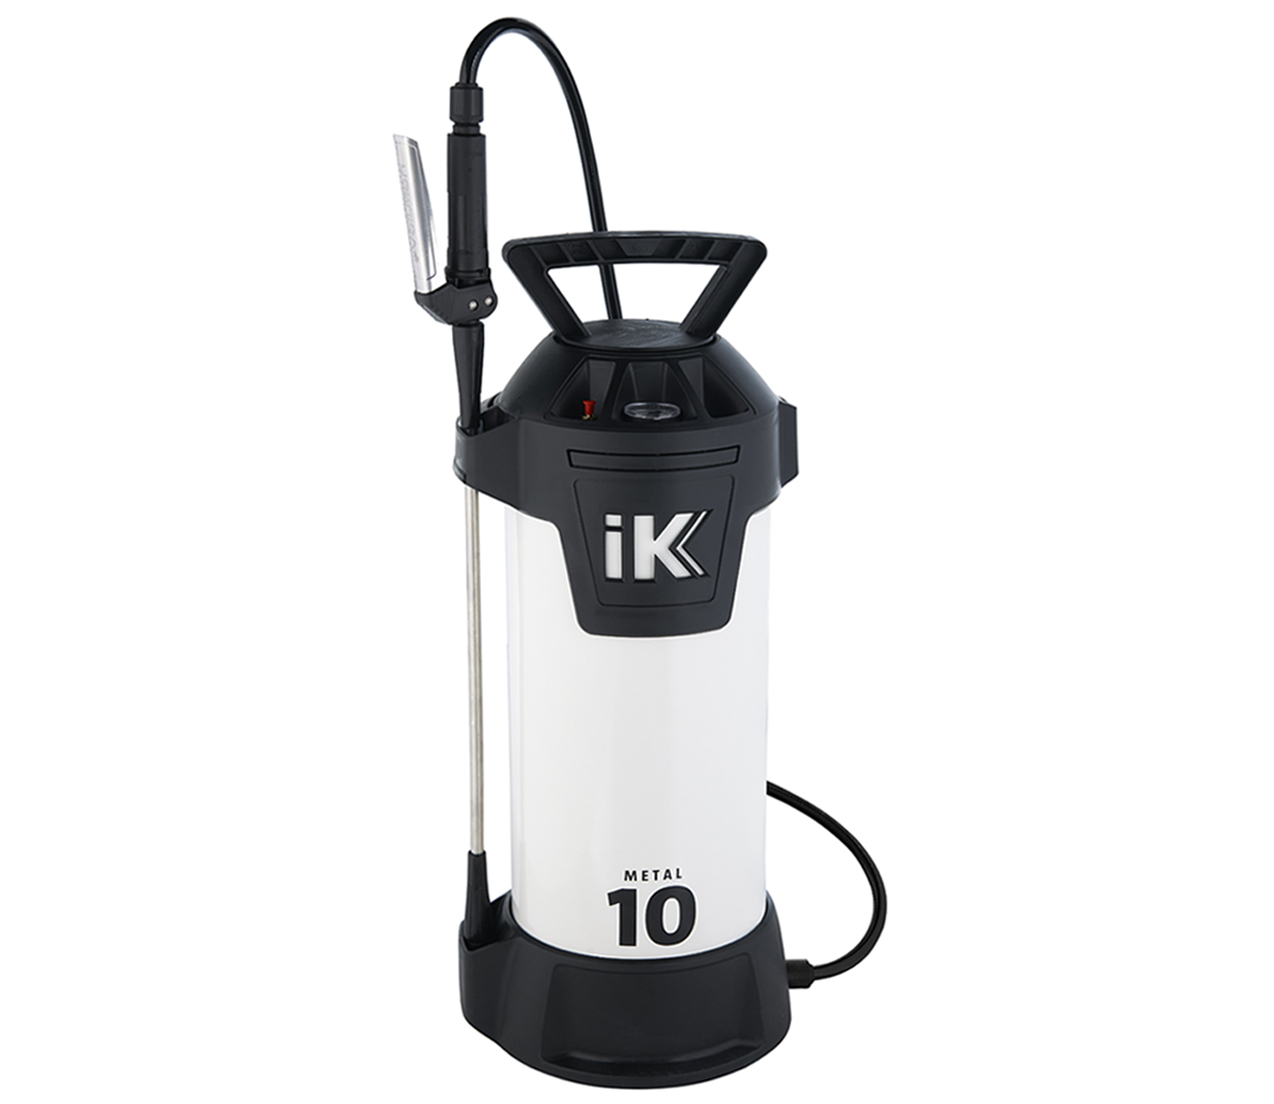 IK 3 Gallon Metal 10 Professional Metal & Stainless Steel Sprayer